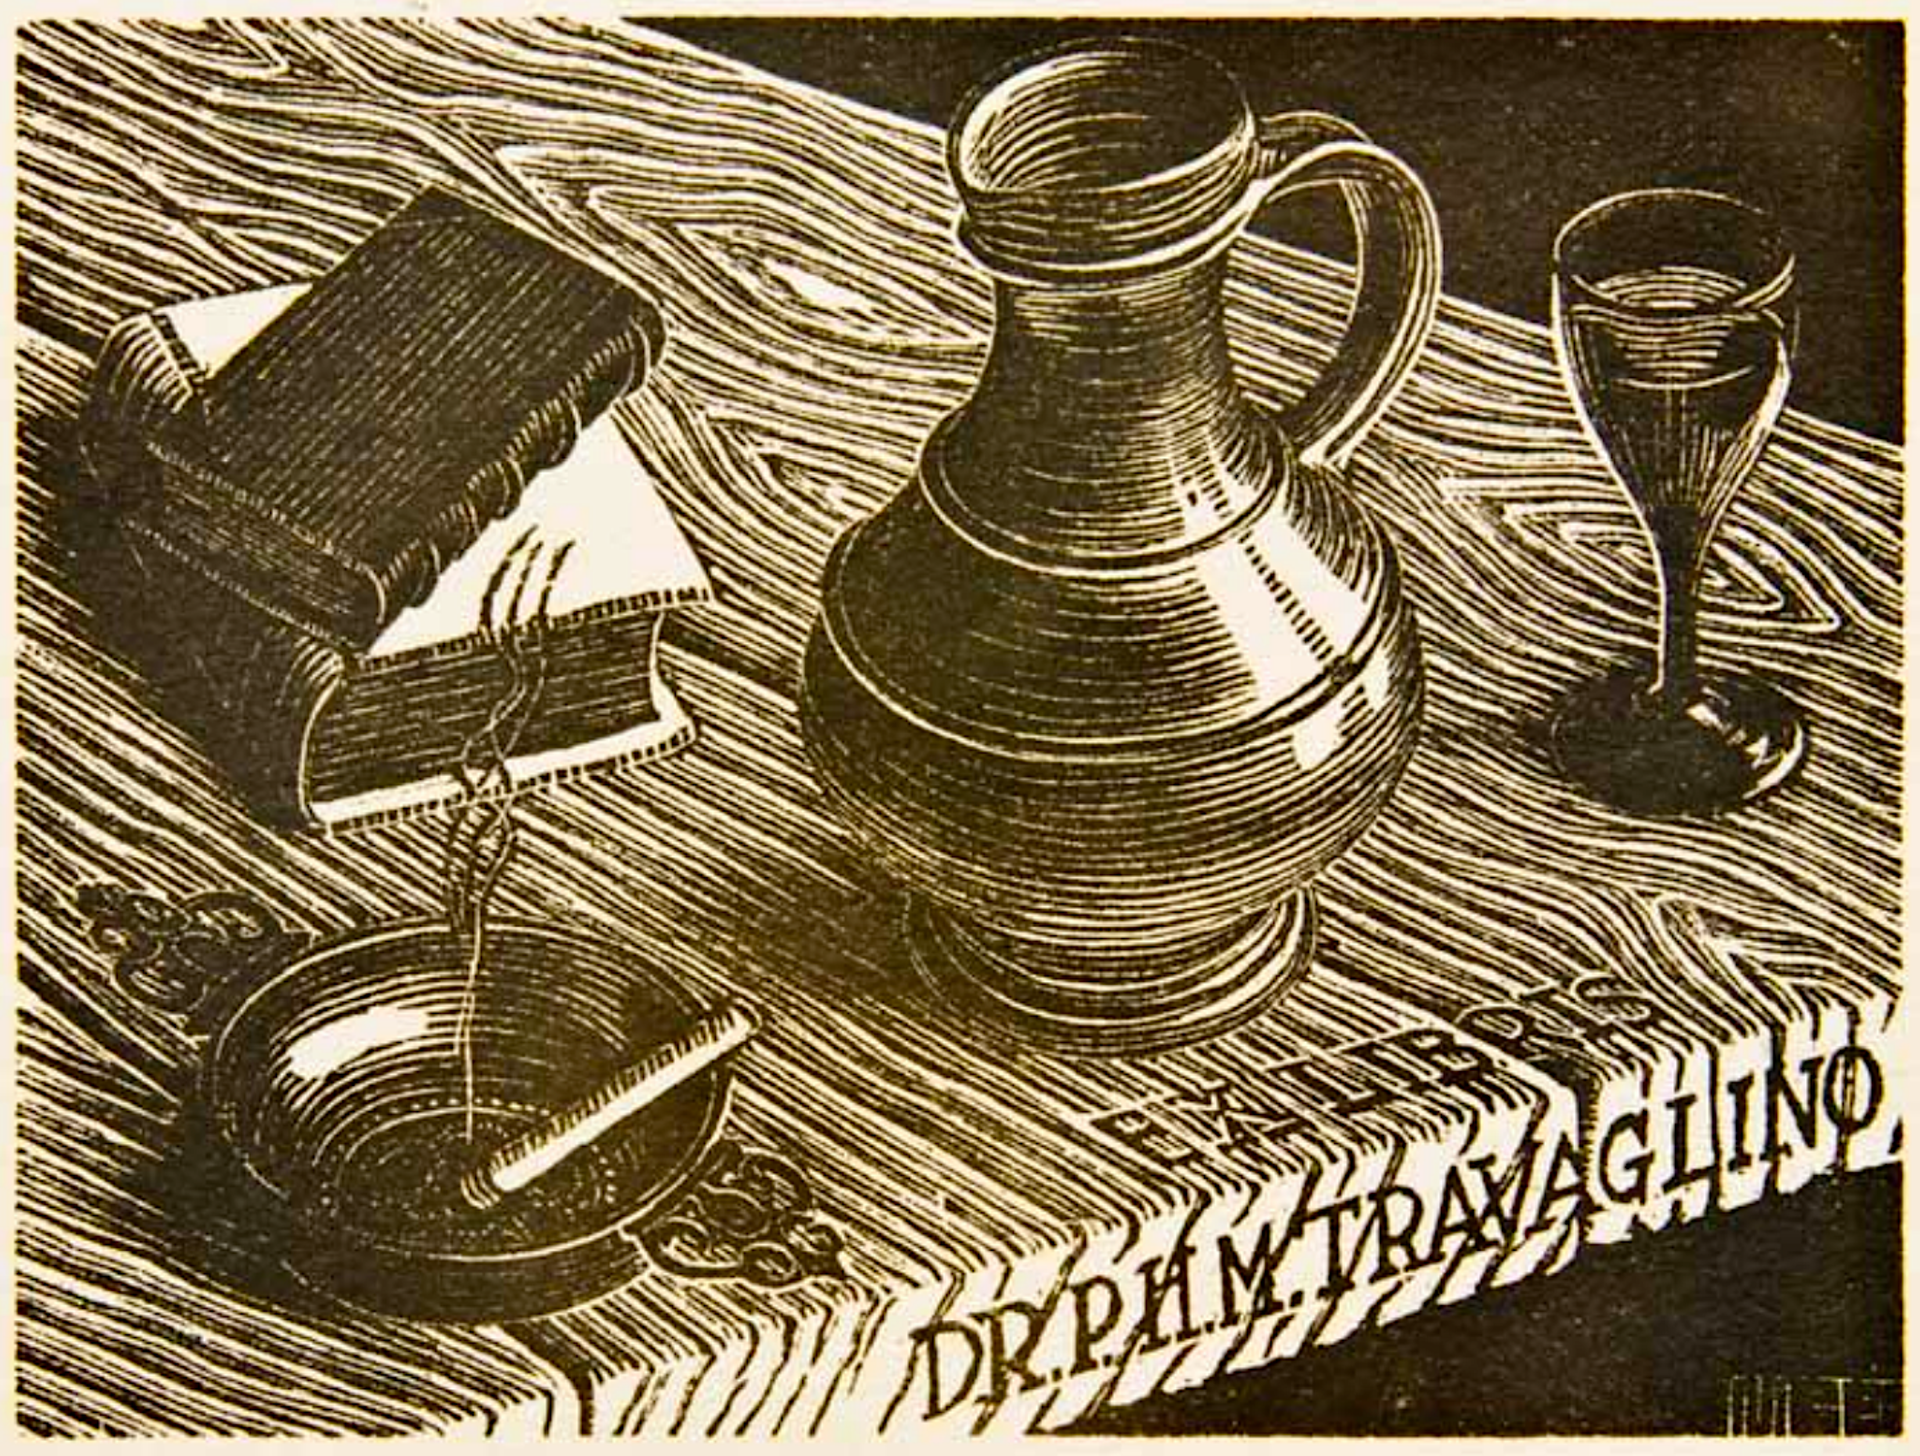 Table Still Life, Dr. Travaglino Ex-Libris by M.C. Escher